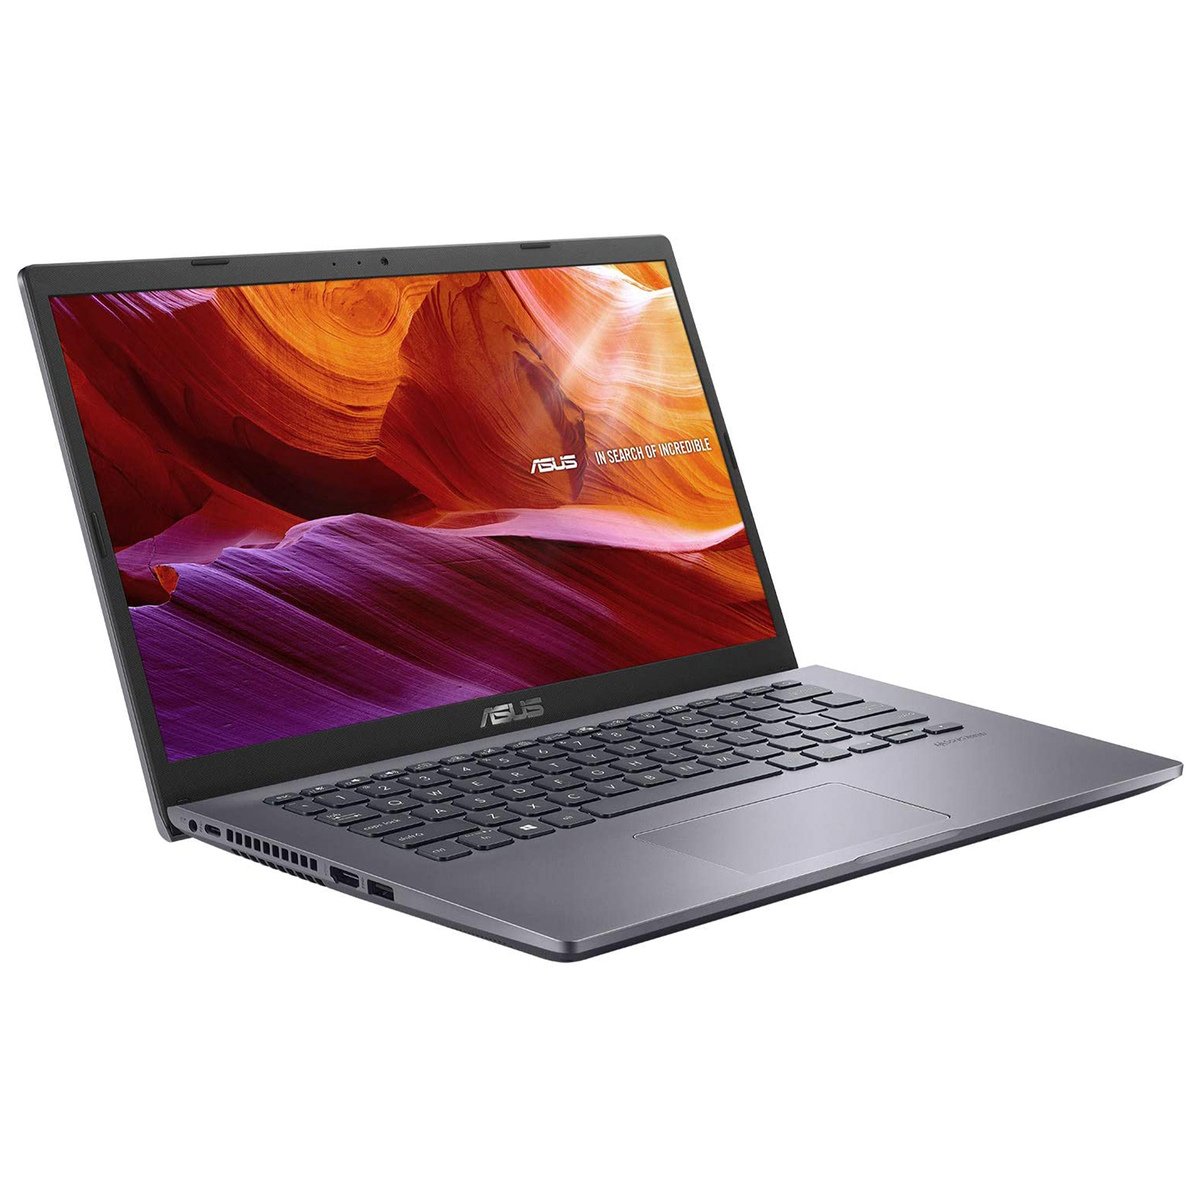 Asus Vivobook X409JA-EK018T Laptop (Gray) -Intel I3-1005G1, 4GB RAM, 1TB HDD, Intel HD Graphics,14 inches,Windows 10,Eng-Arb-KB